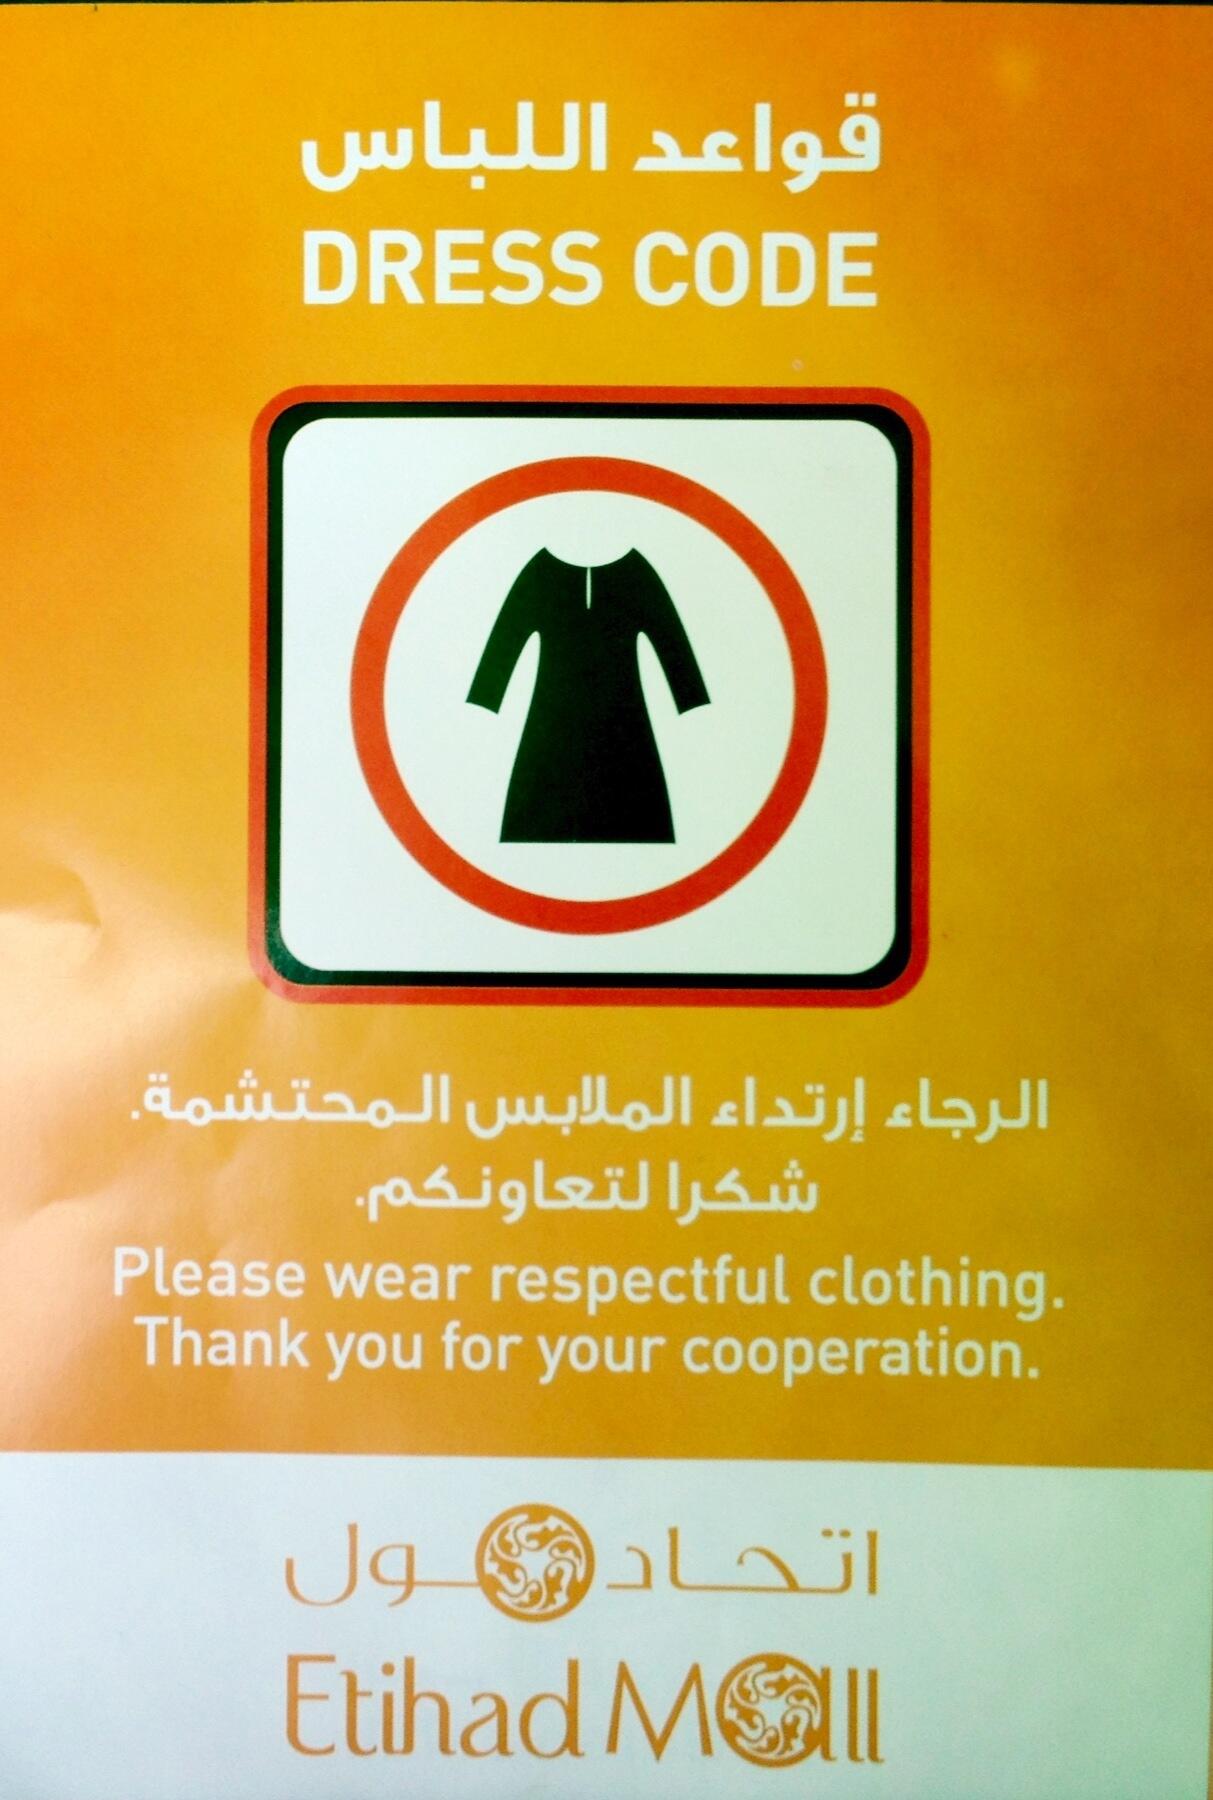 What to wear in Dubai | Dubai dress code | Visit Dubai